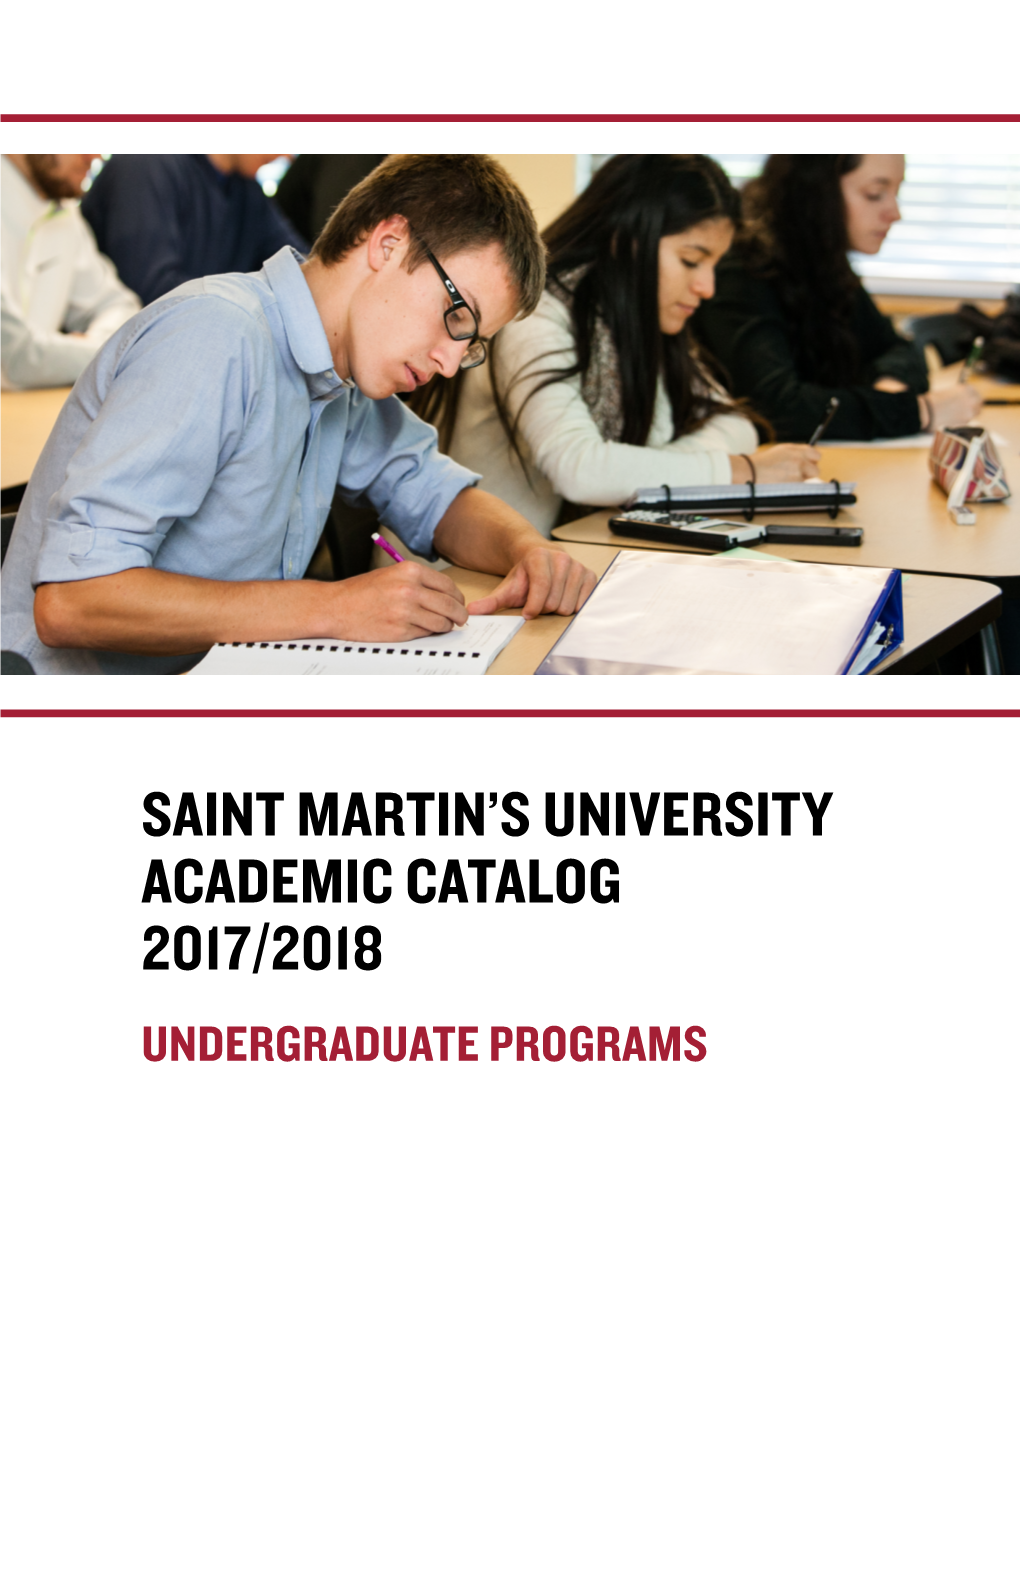 Saint Martin's University Academic Catalog 2017/2018